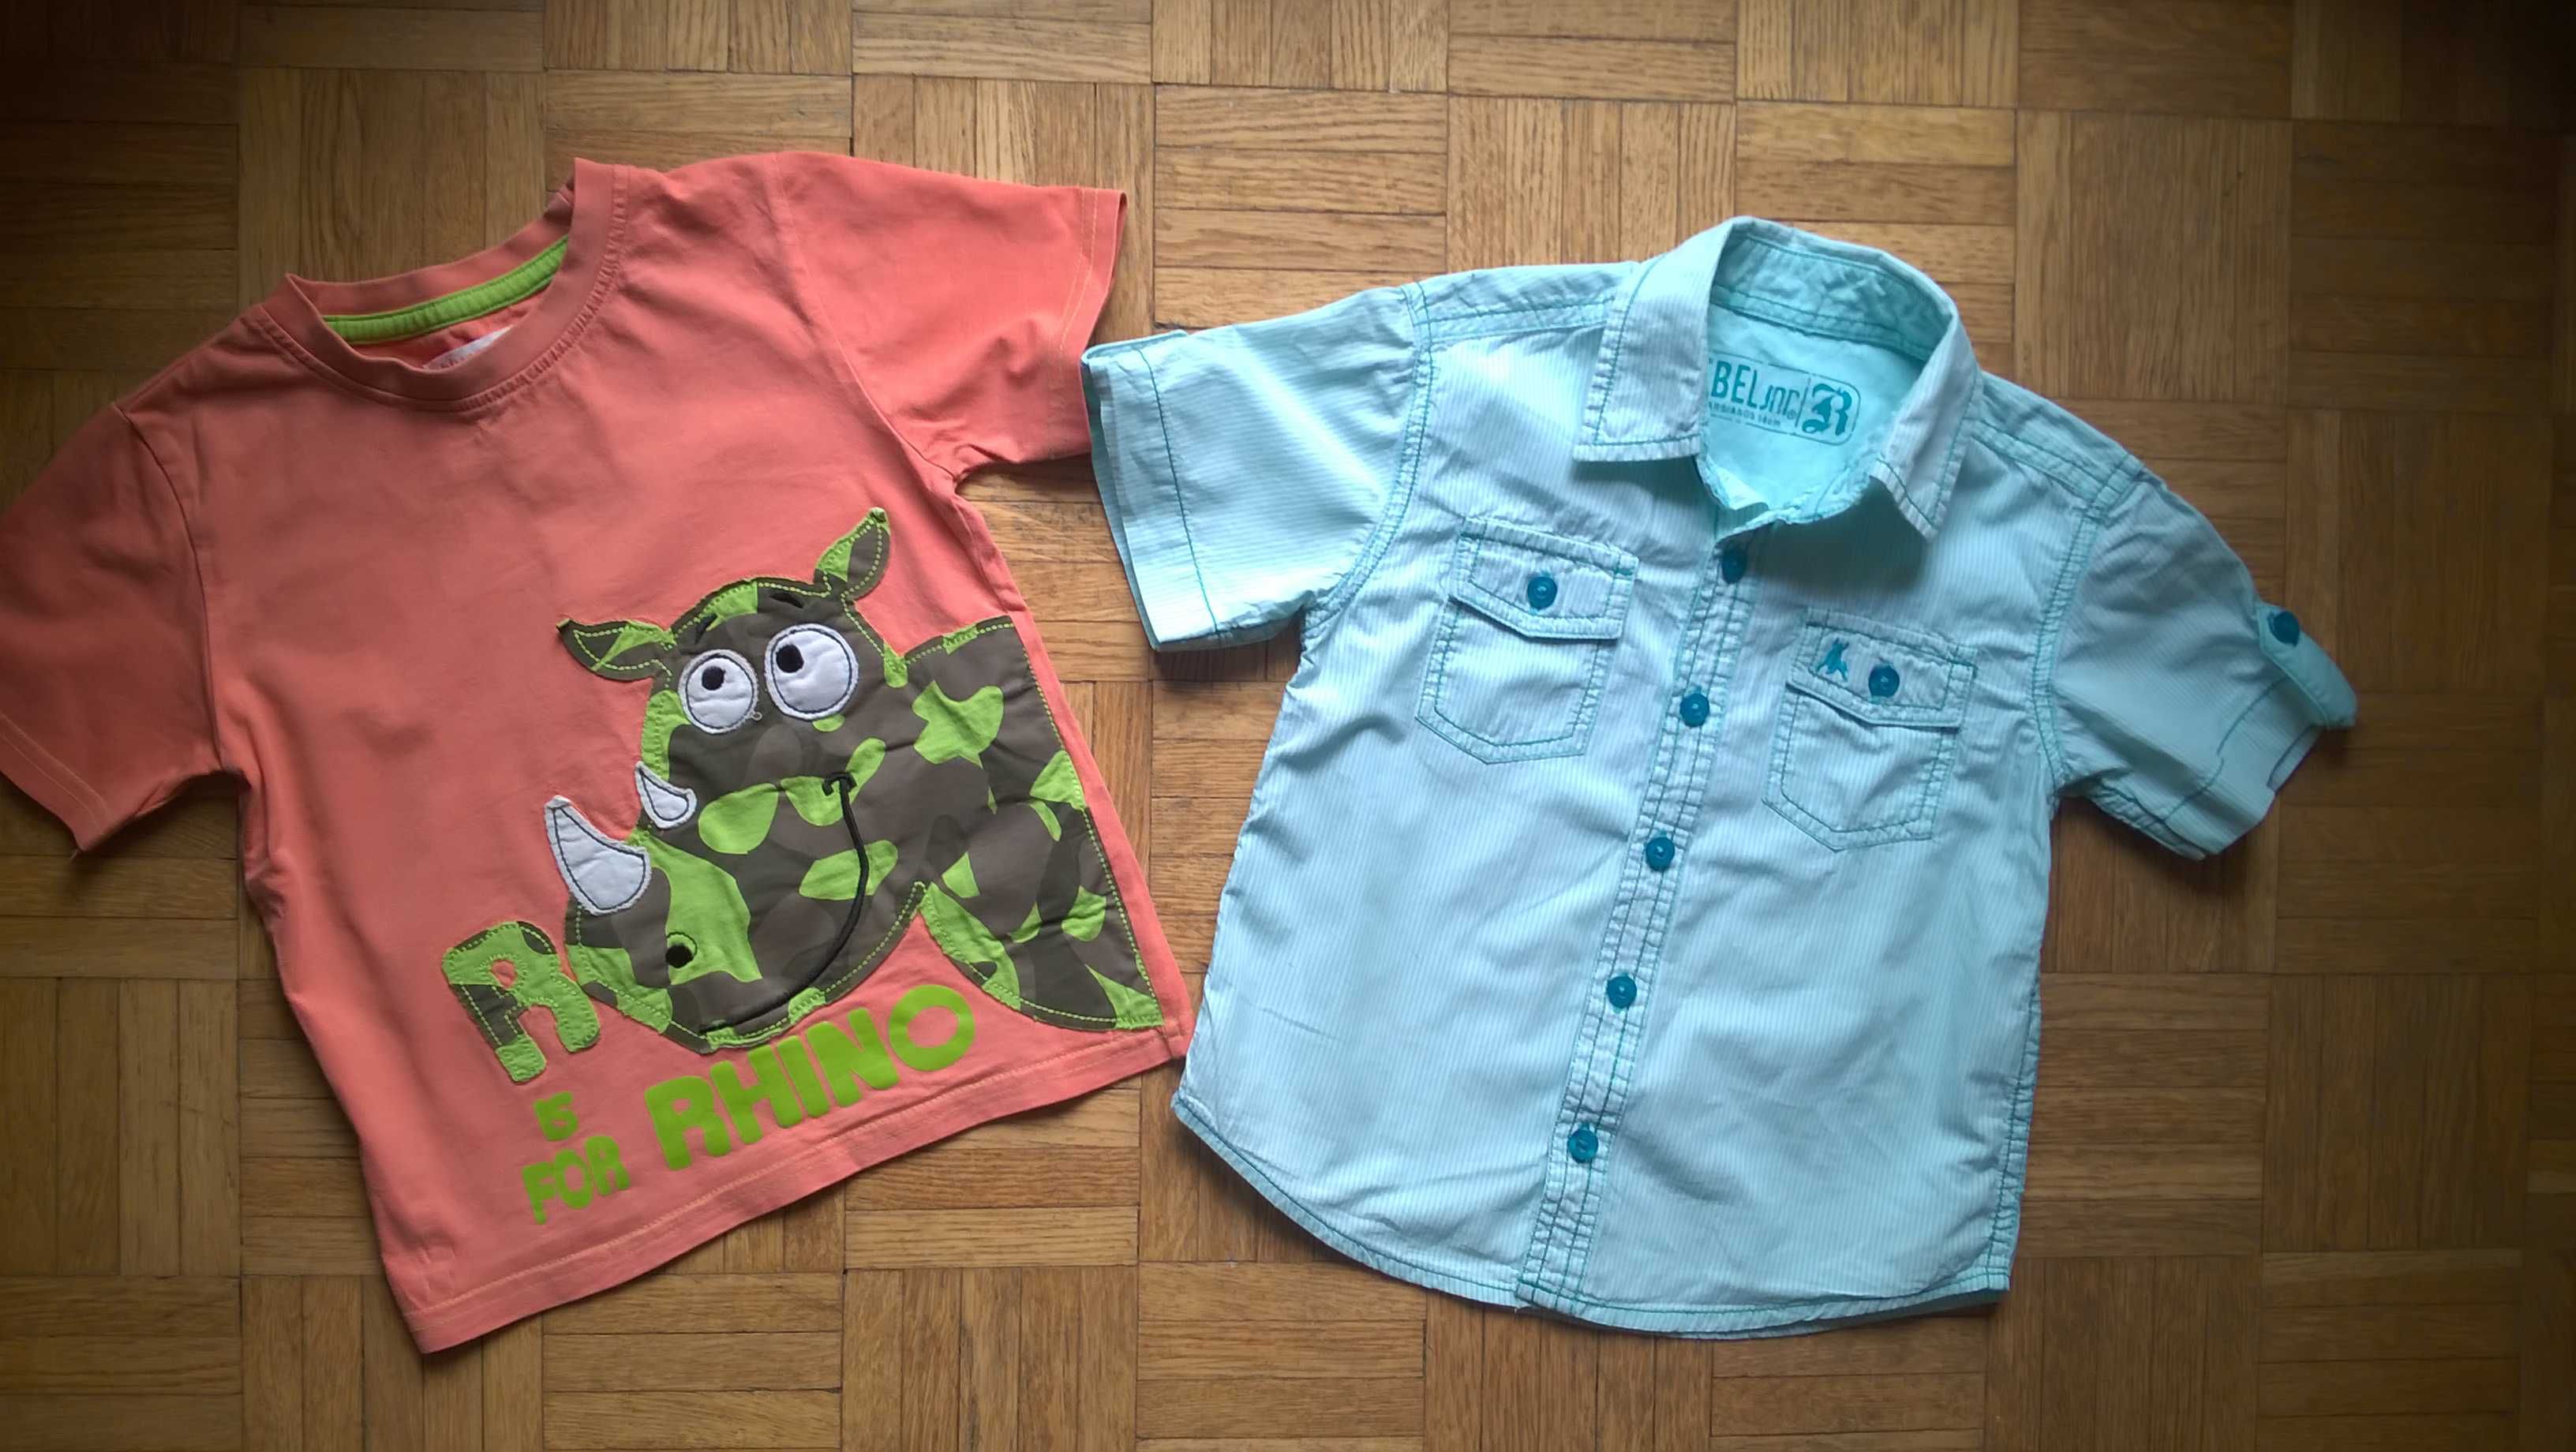 Komplet: T-shirt Bluezoo + ogrodniczki +koszula, r. 92